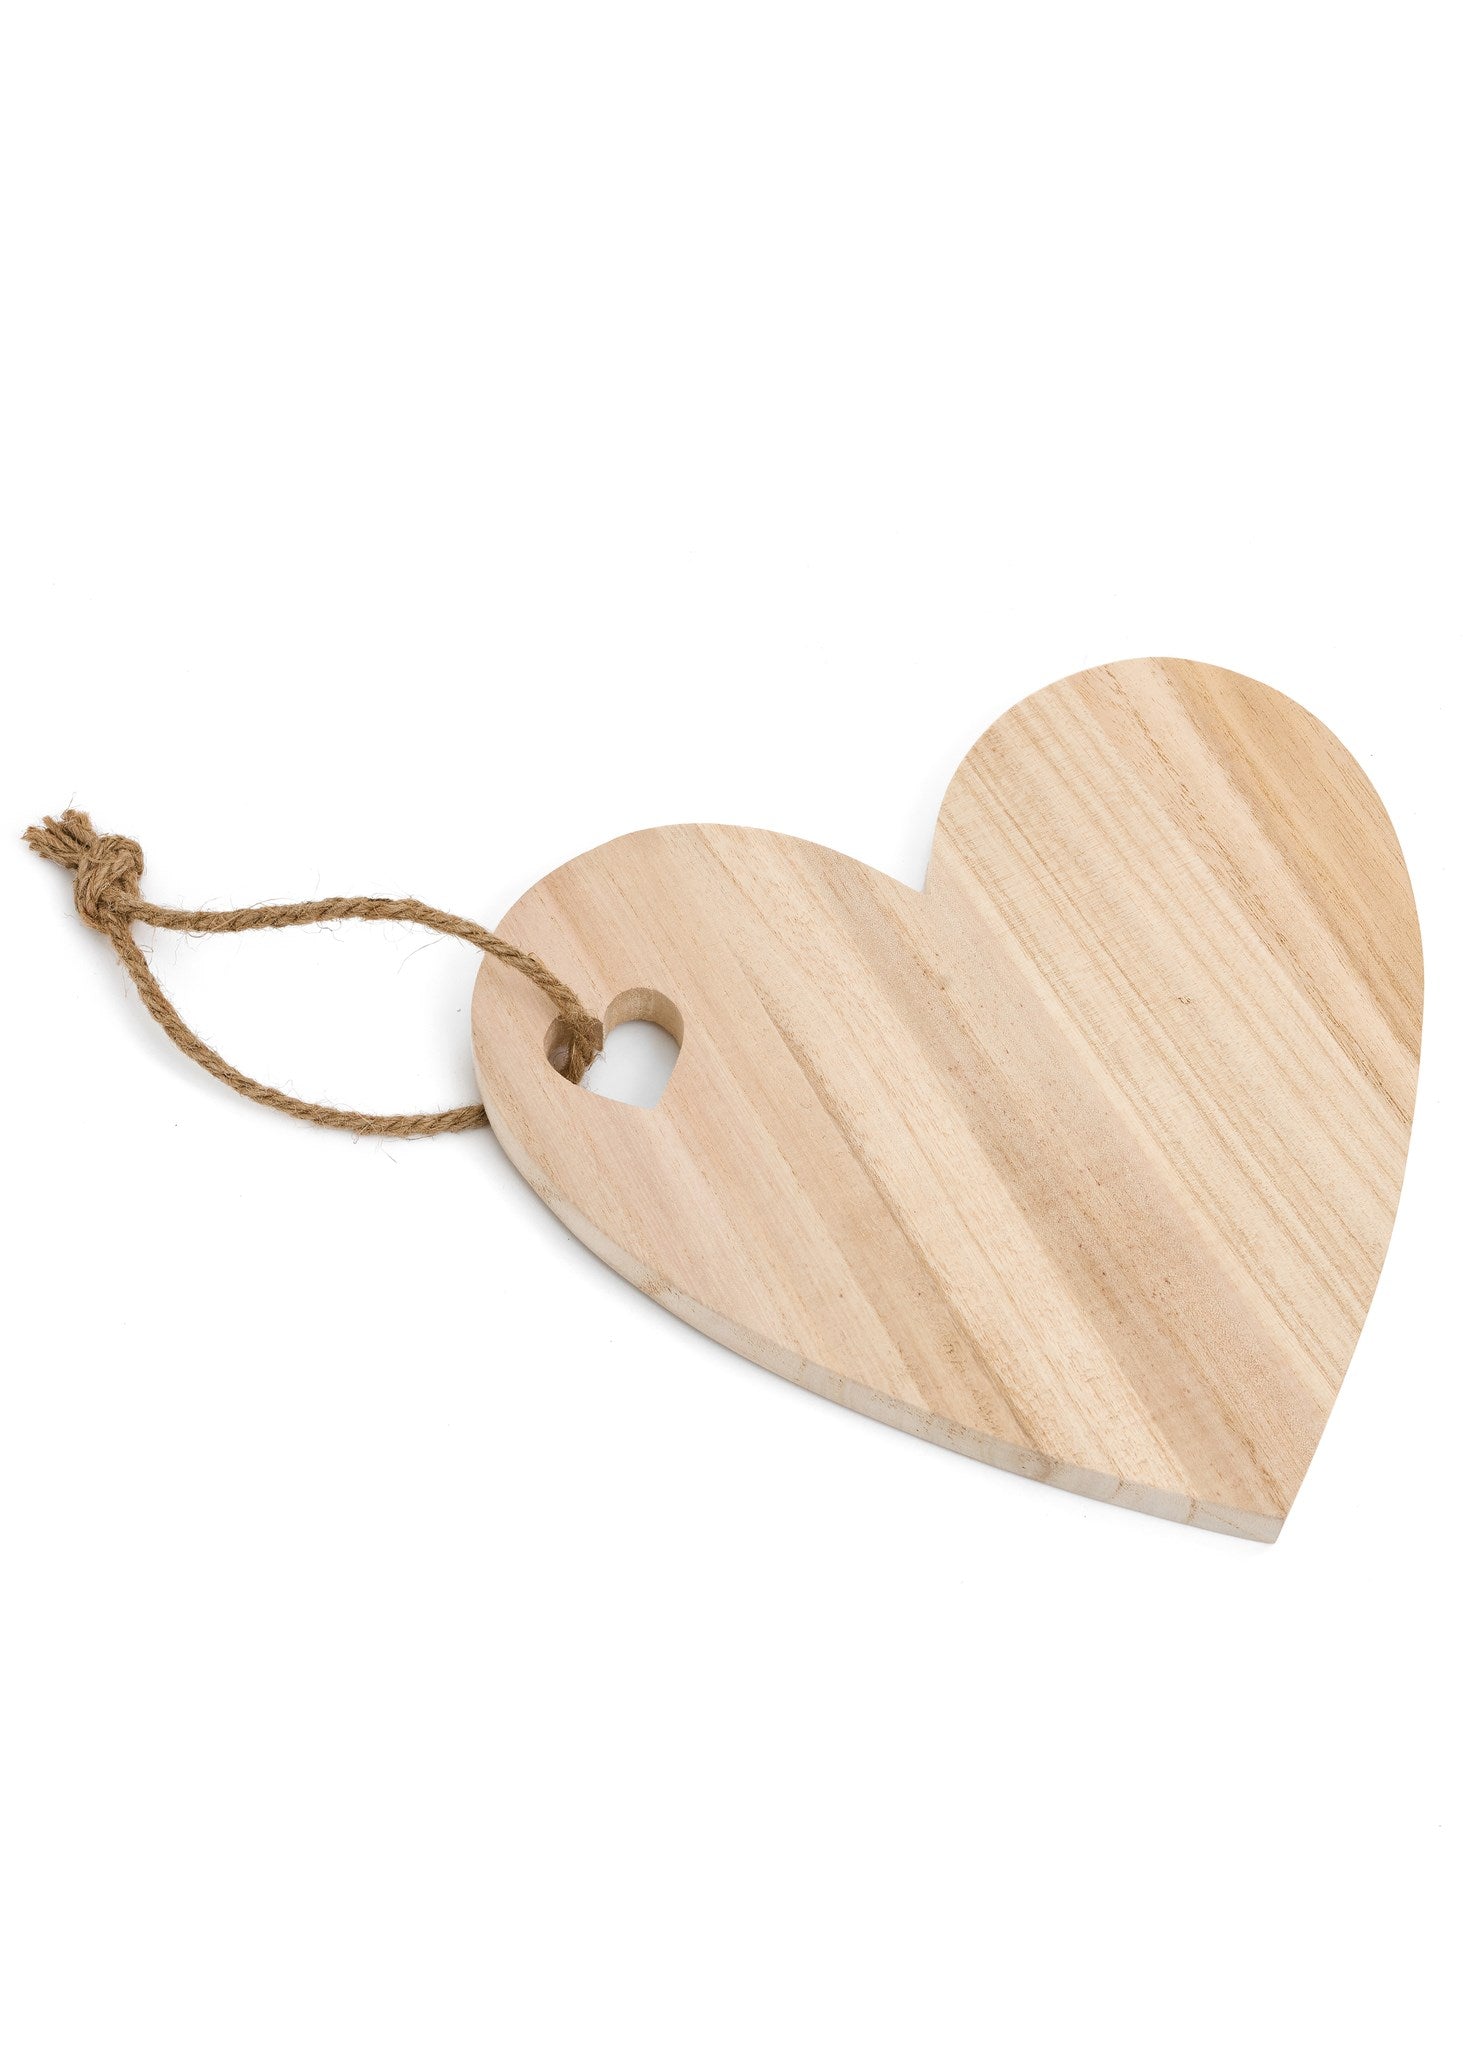 Serving Board Wood Heart Shaped Nat